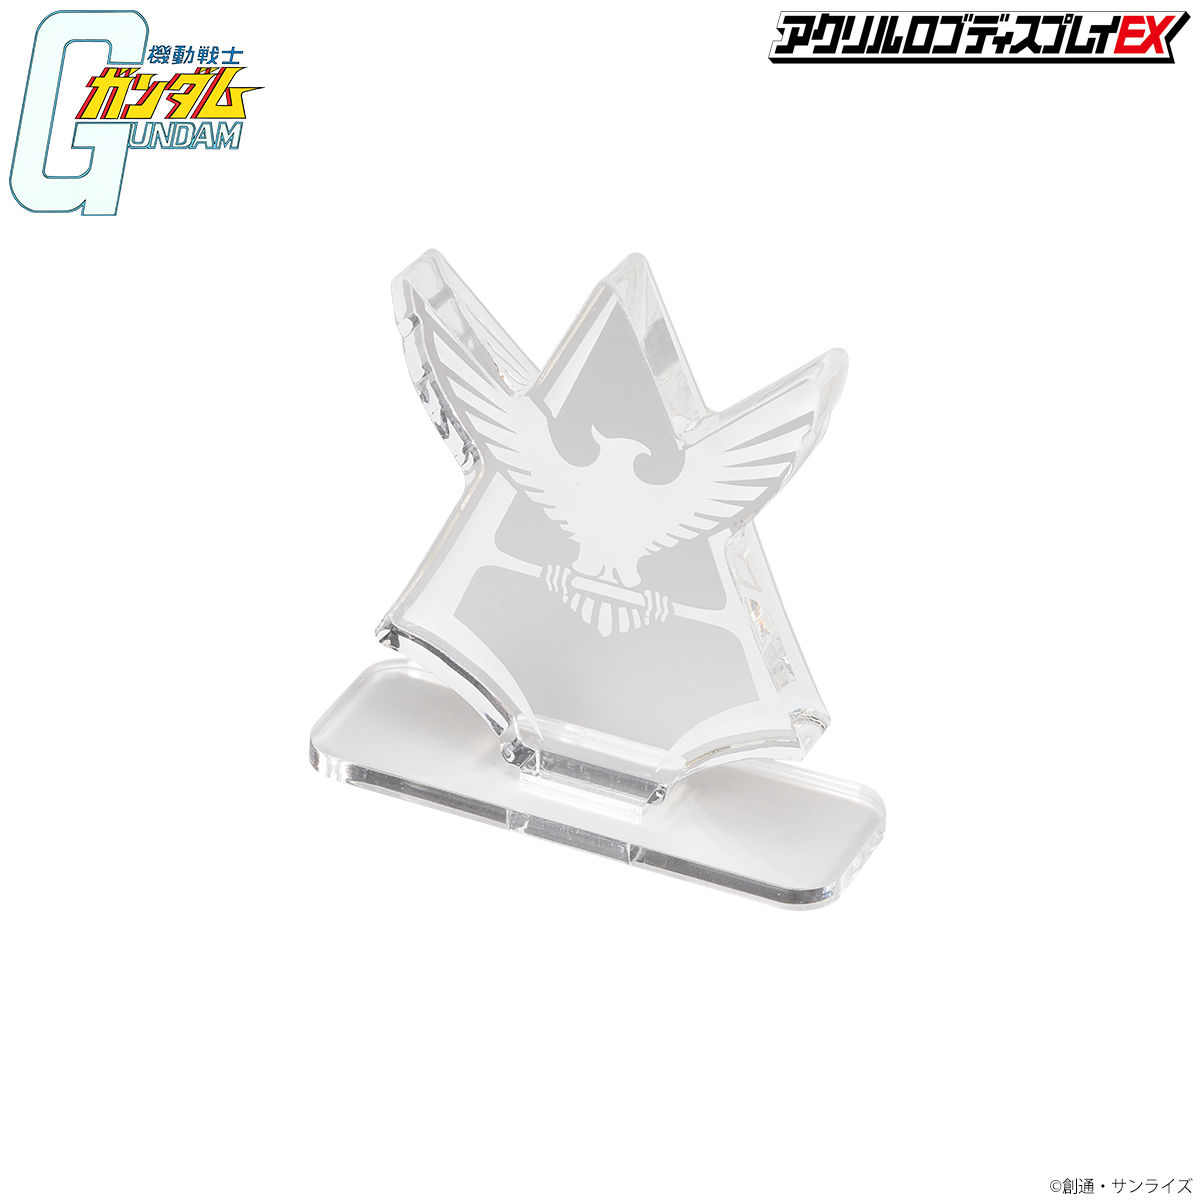 Acrylic Logo Diplay EX-Char Aznable Personal Mark(Mobile Suit Gundam)